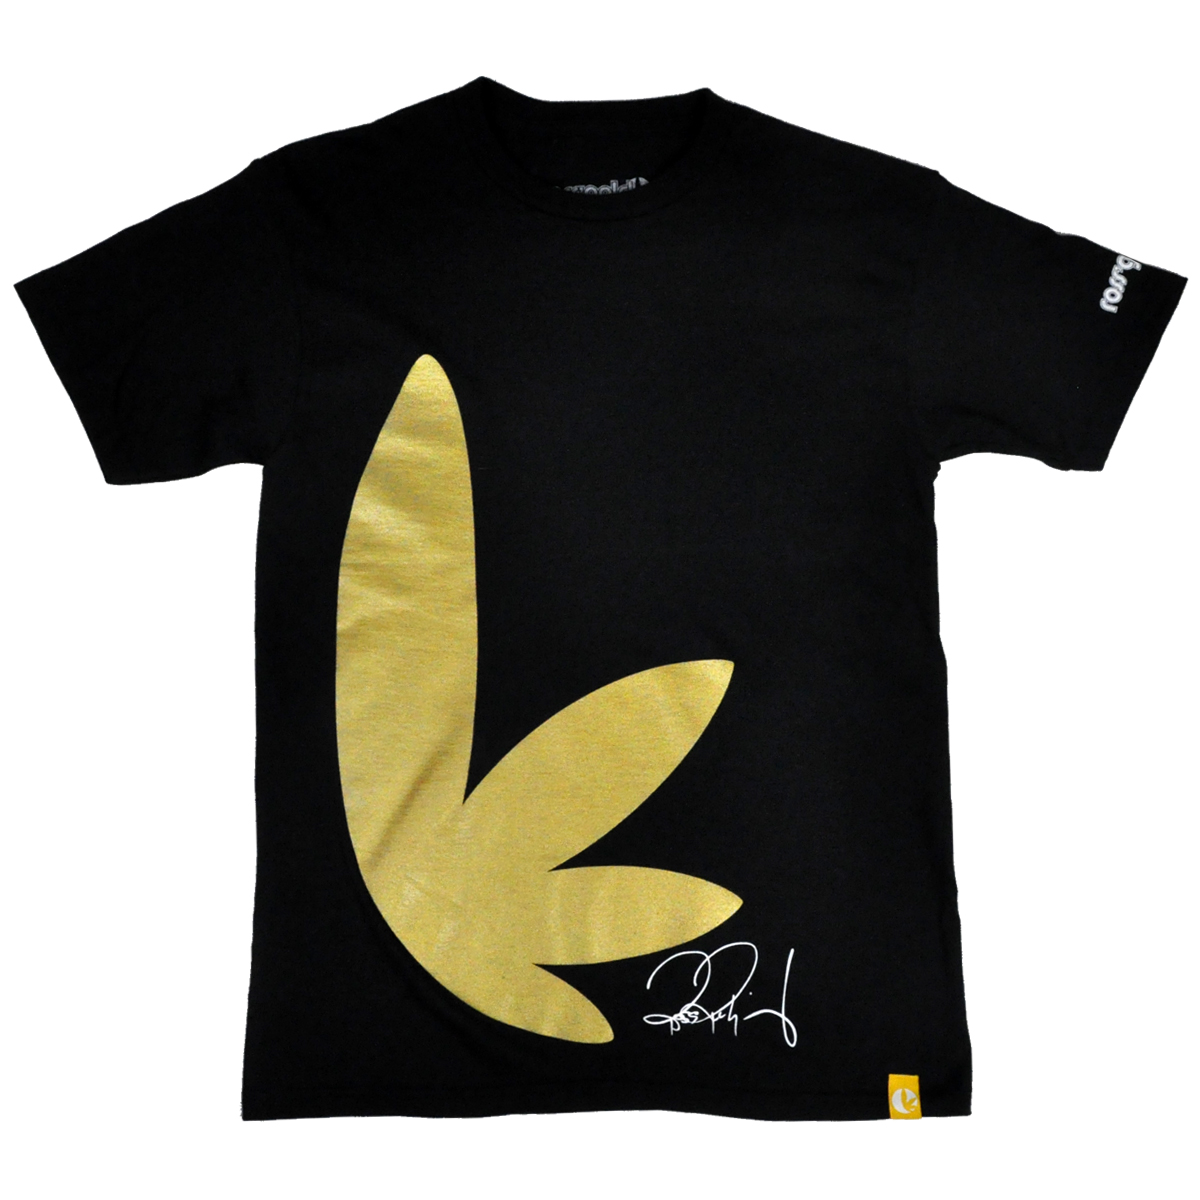 Ross' Gold marijuana T-Shirt wholesale